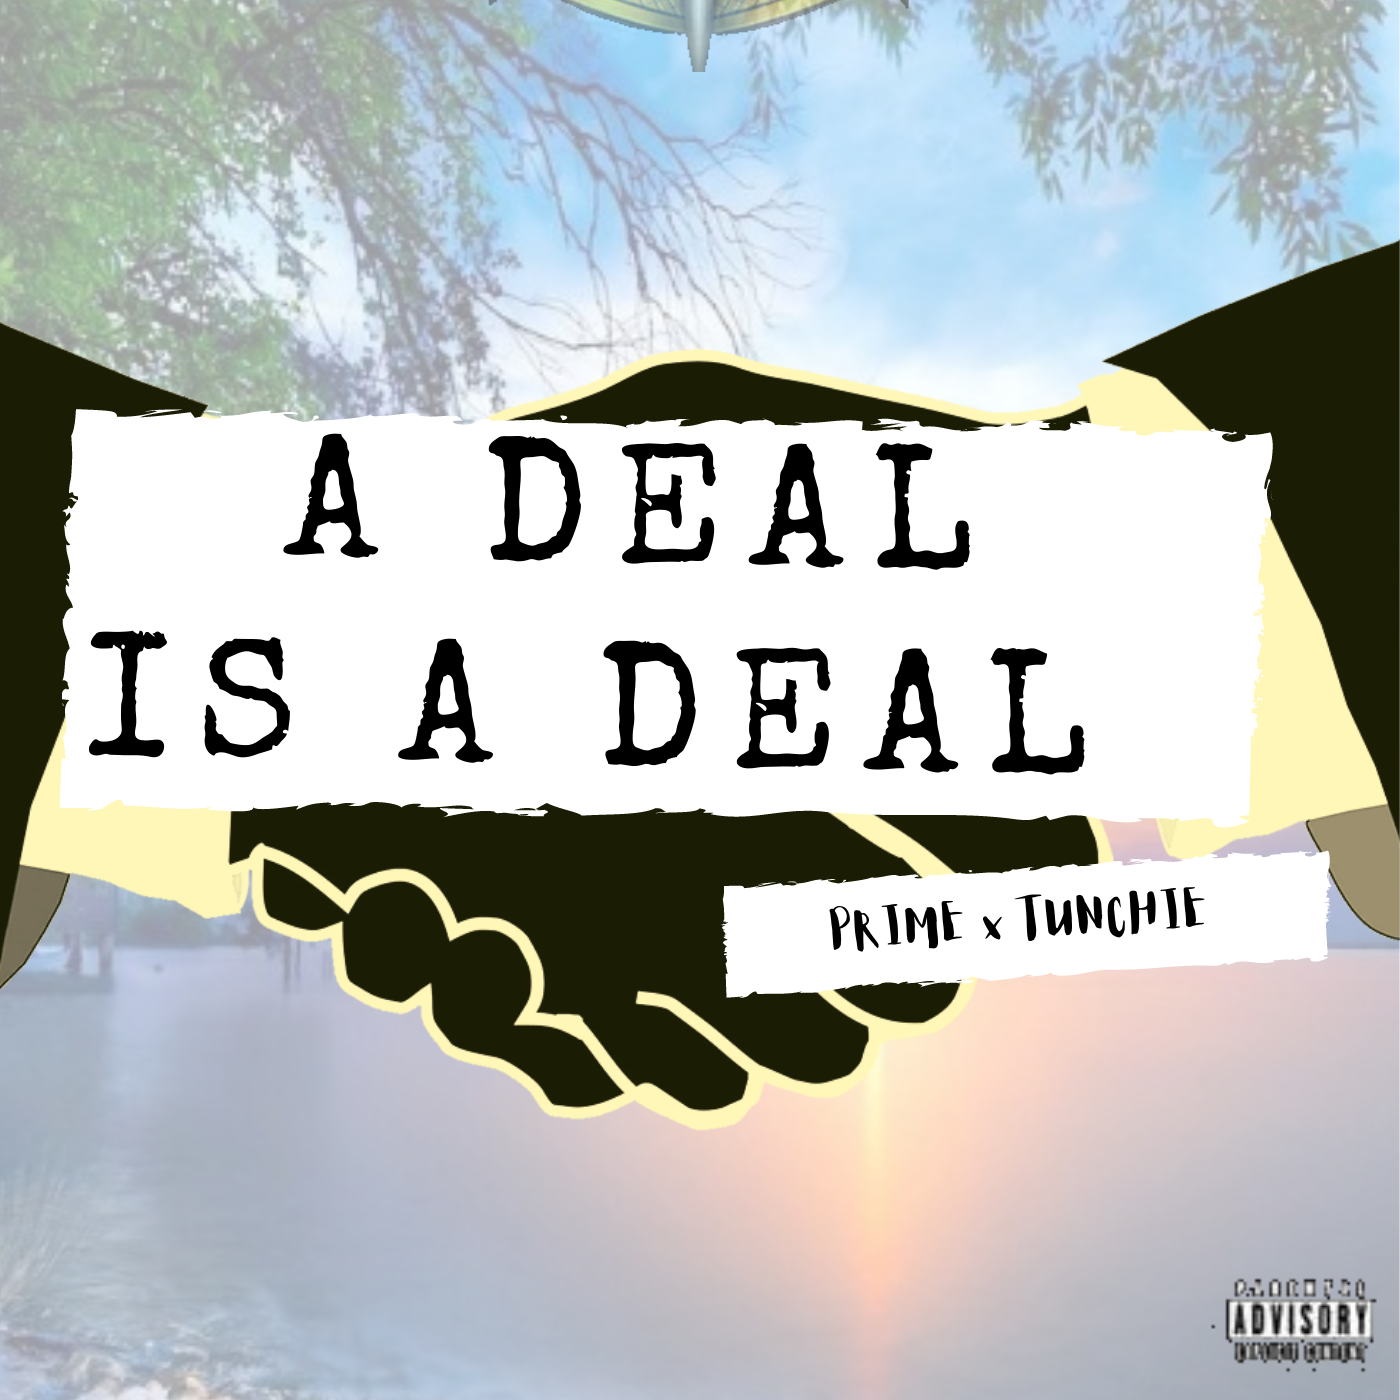 A Deal is a Deal